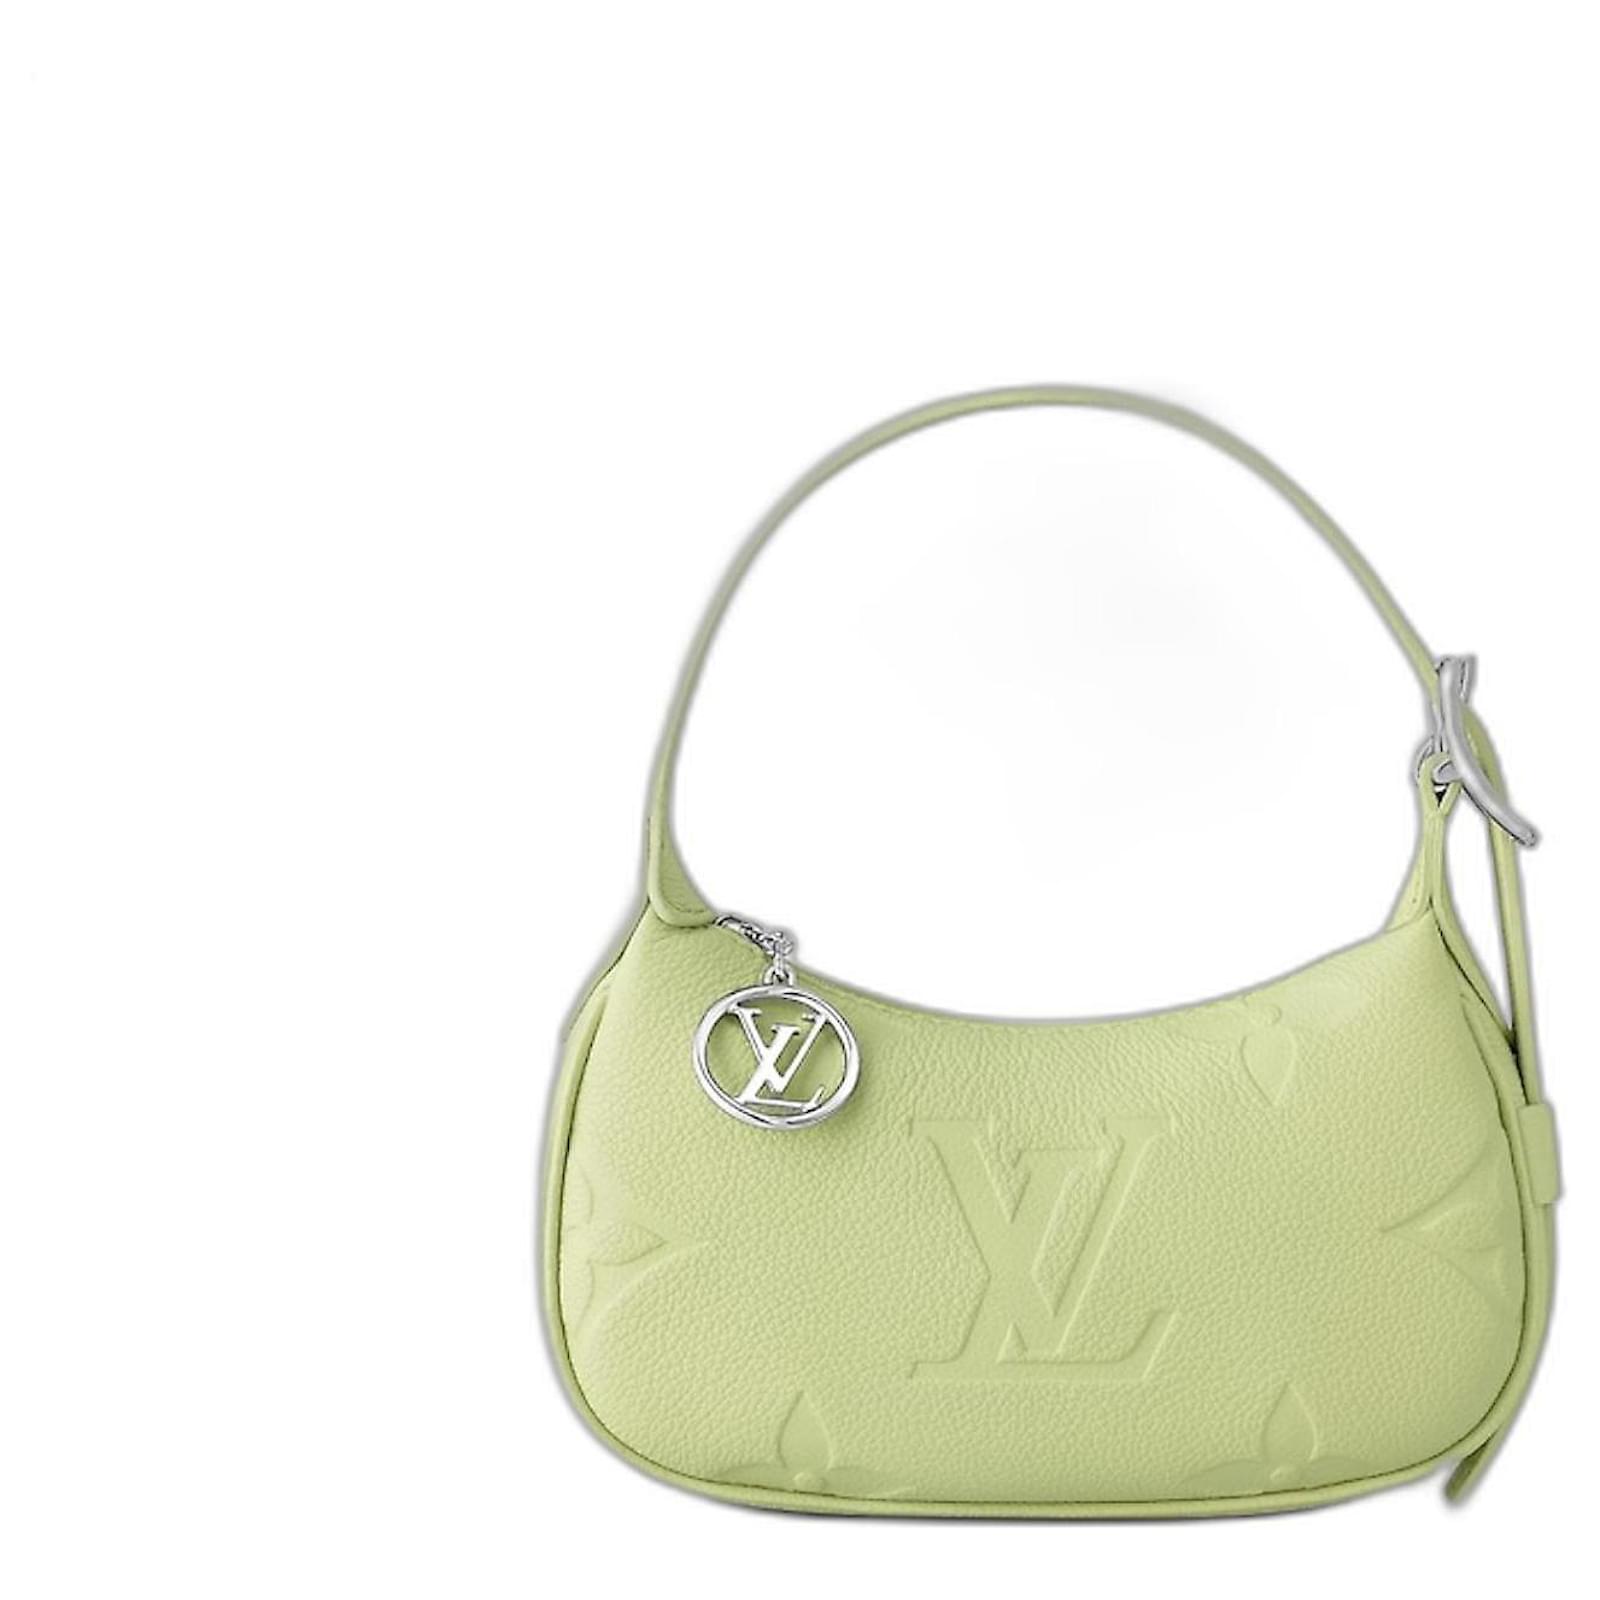 New LV release!! Mini moon shoulder bag in vert green empriente leathe